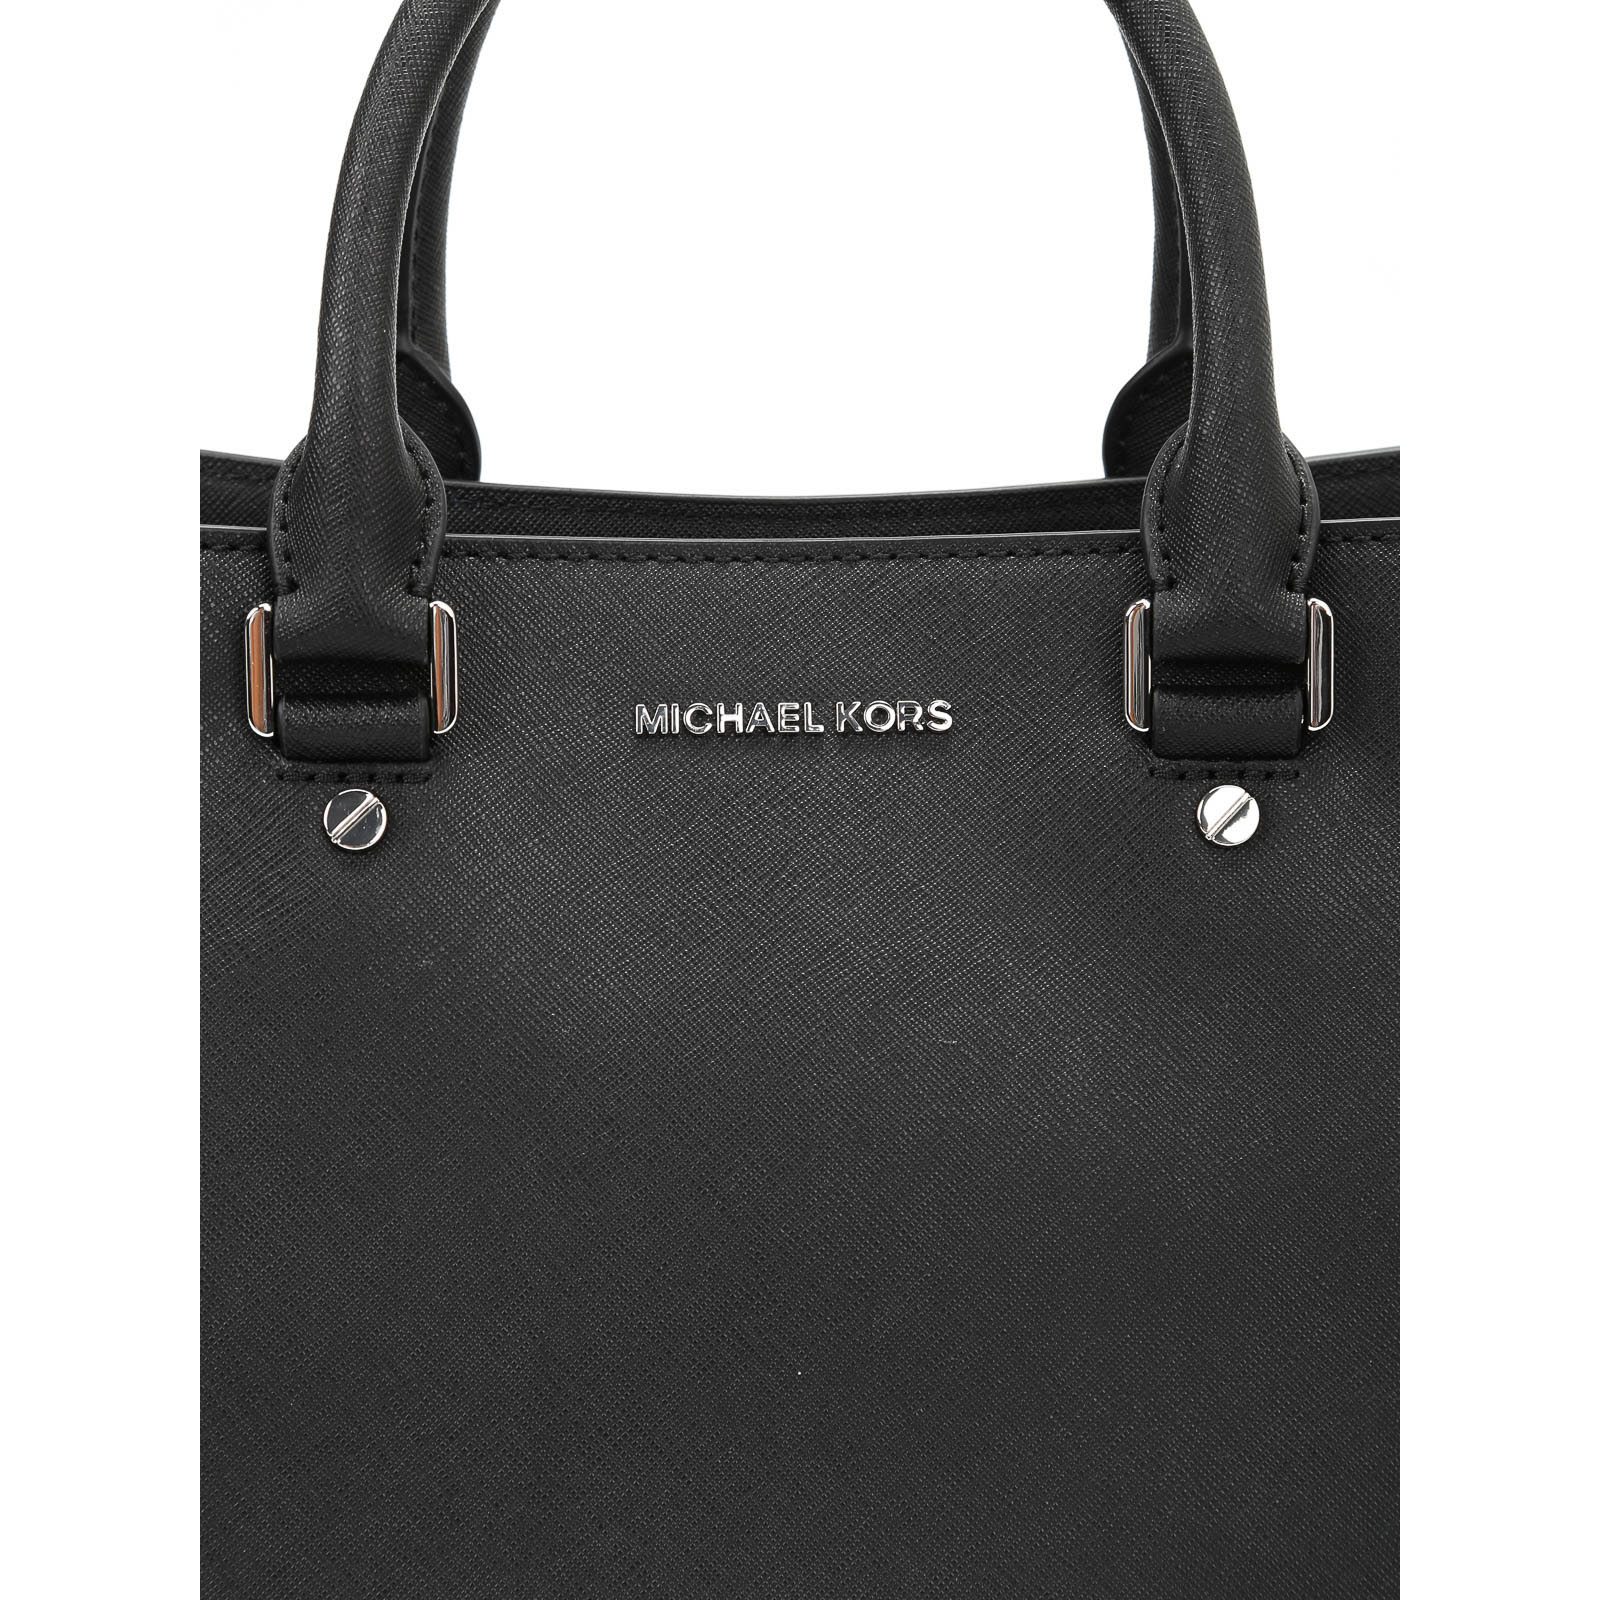 Michael Kors Savannah Large Saffiano Leather Satchel Crossbody Bag Black / Silver # 38T8SS7S3L